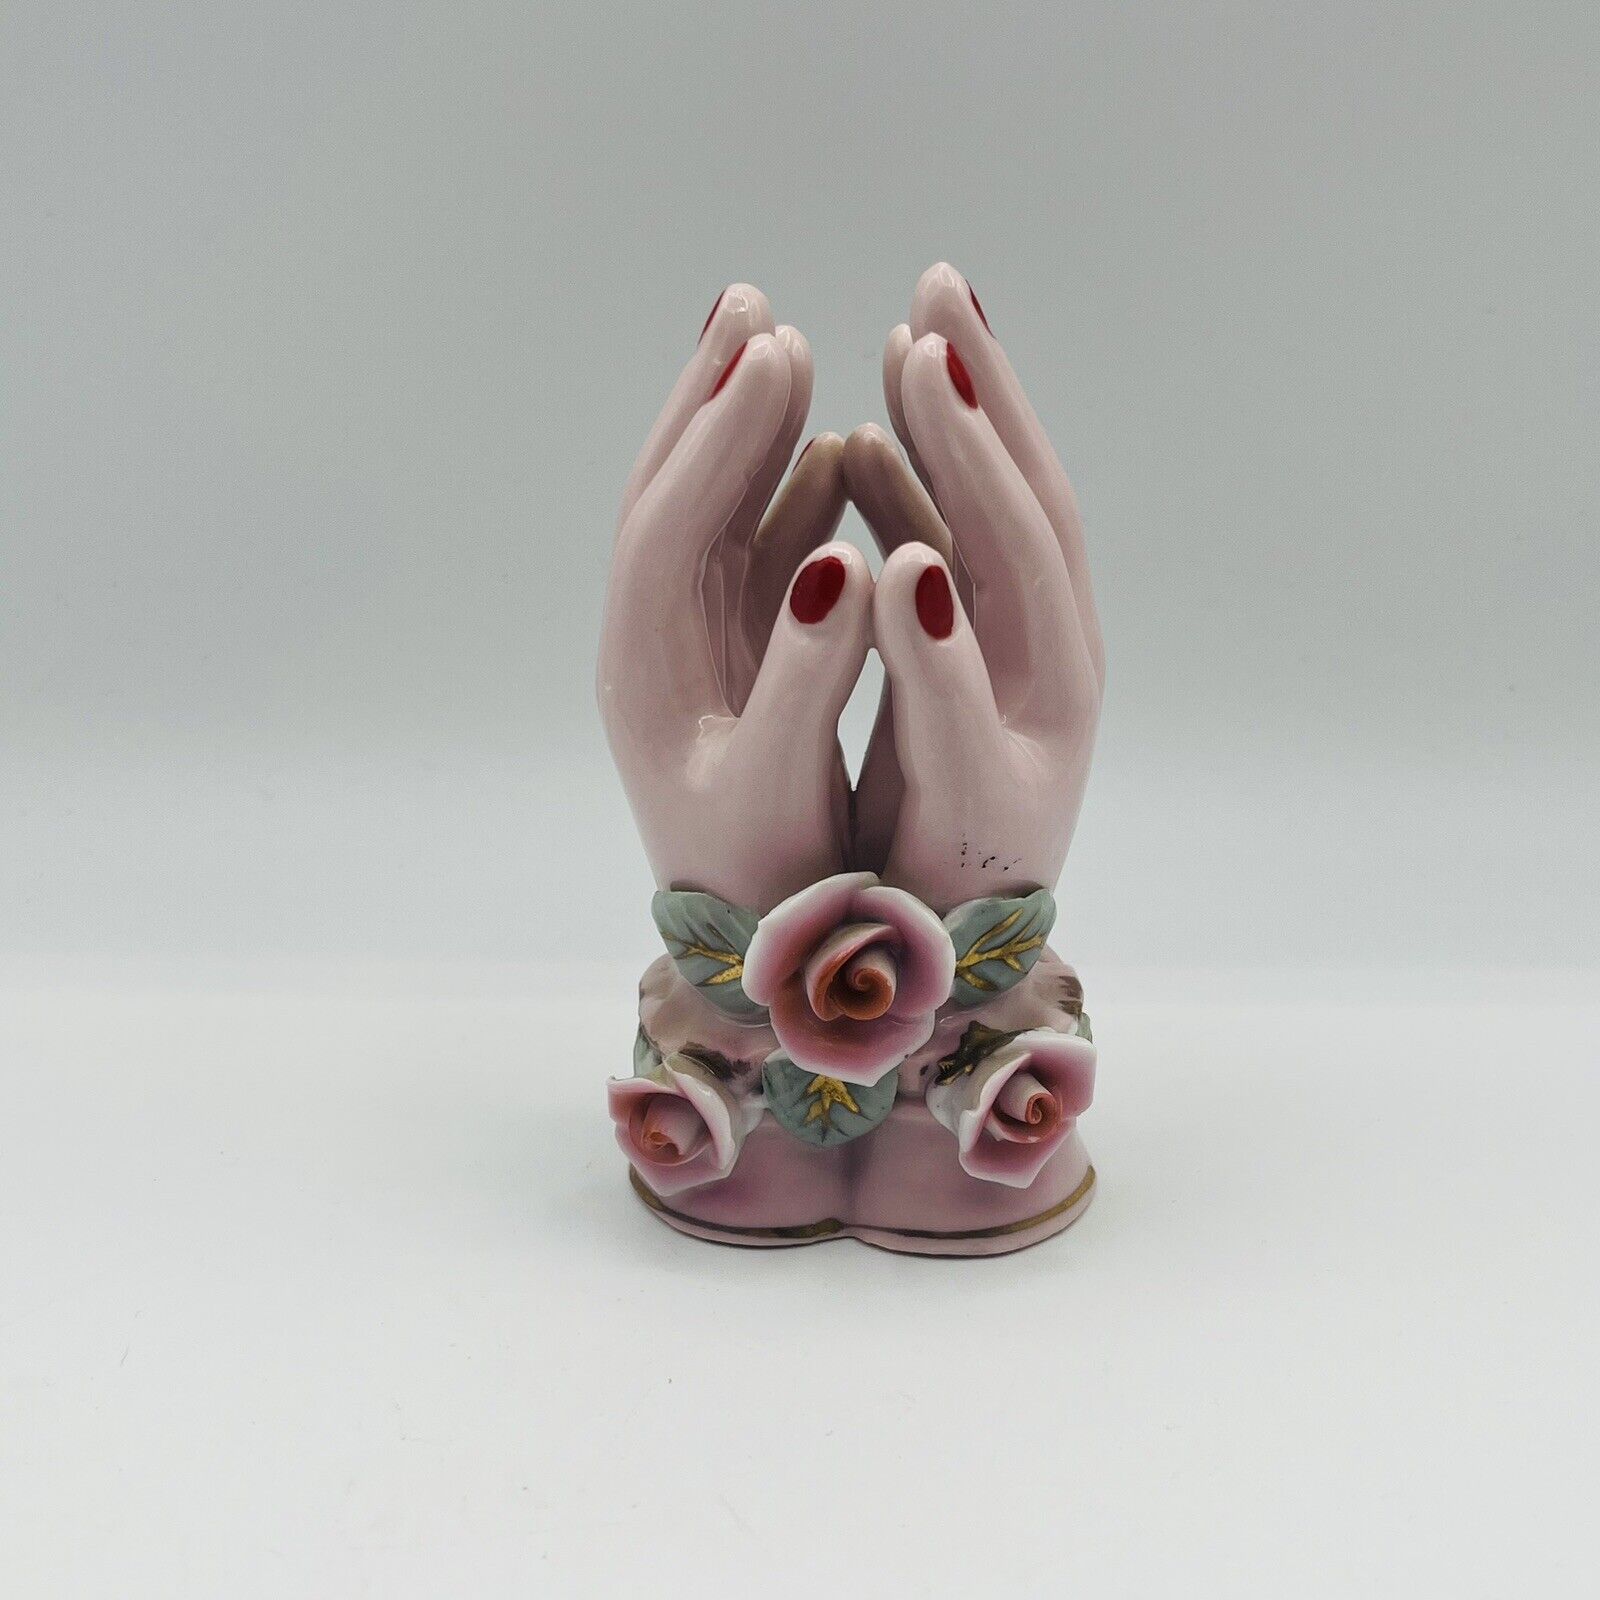 Vintage Ceramic Pink Hands With Roses Figurine